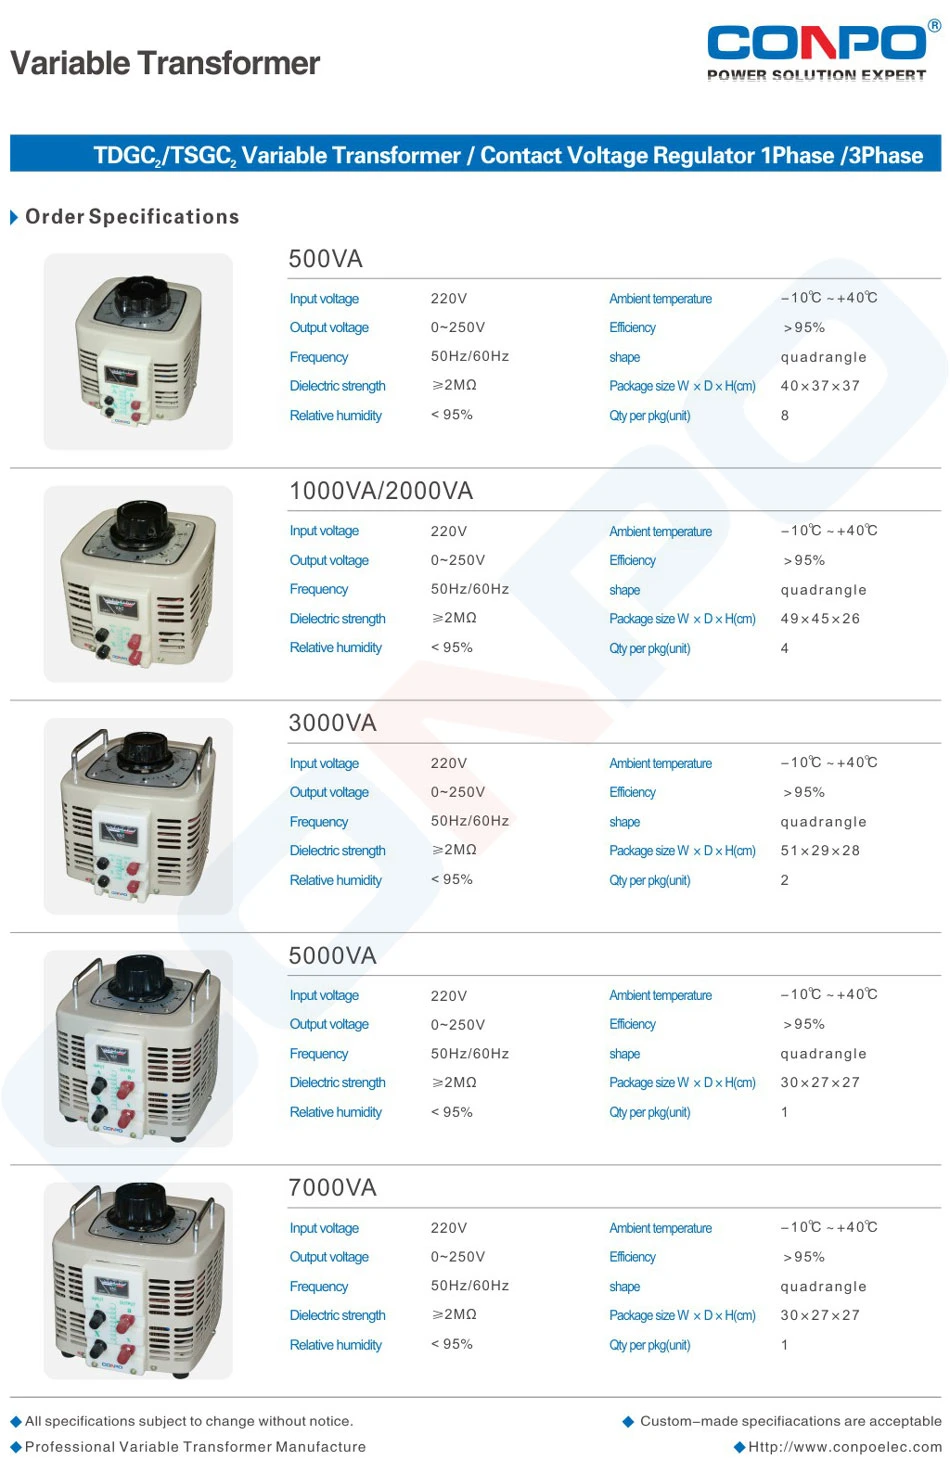 Tdgc2-40kVA 1phase Contact Voltage Regulator/Variable Transformer